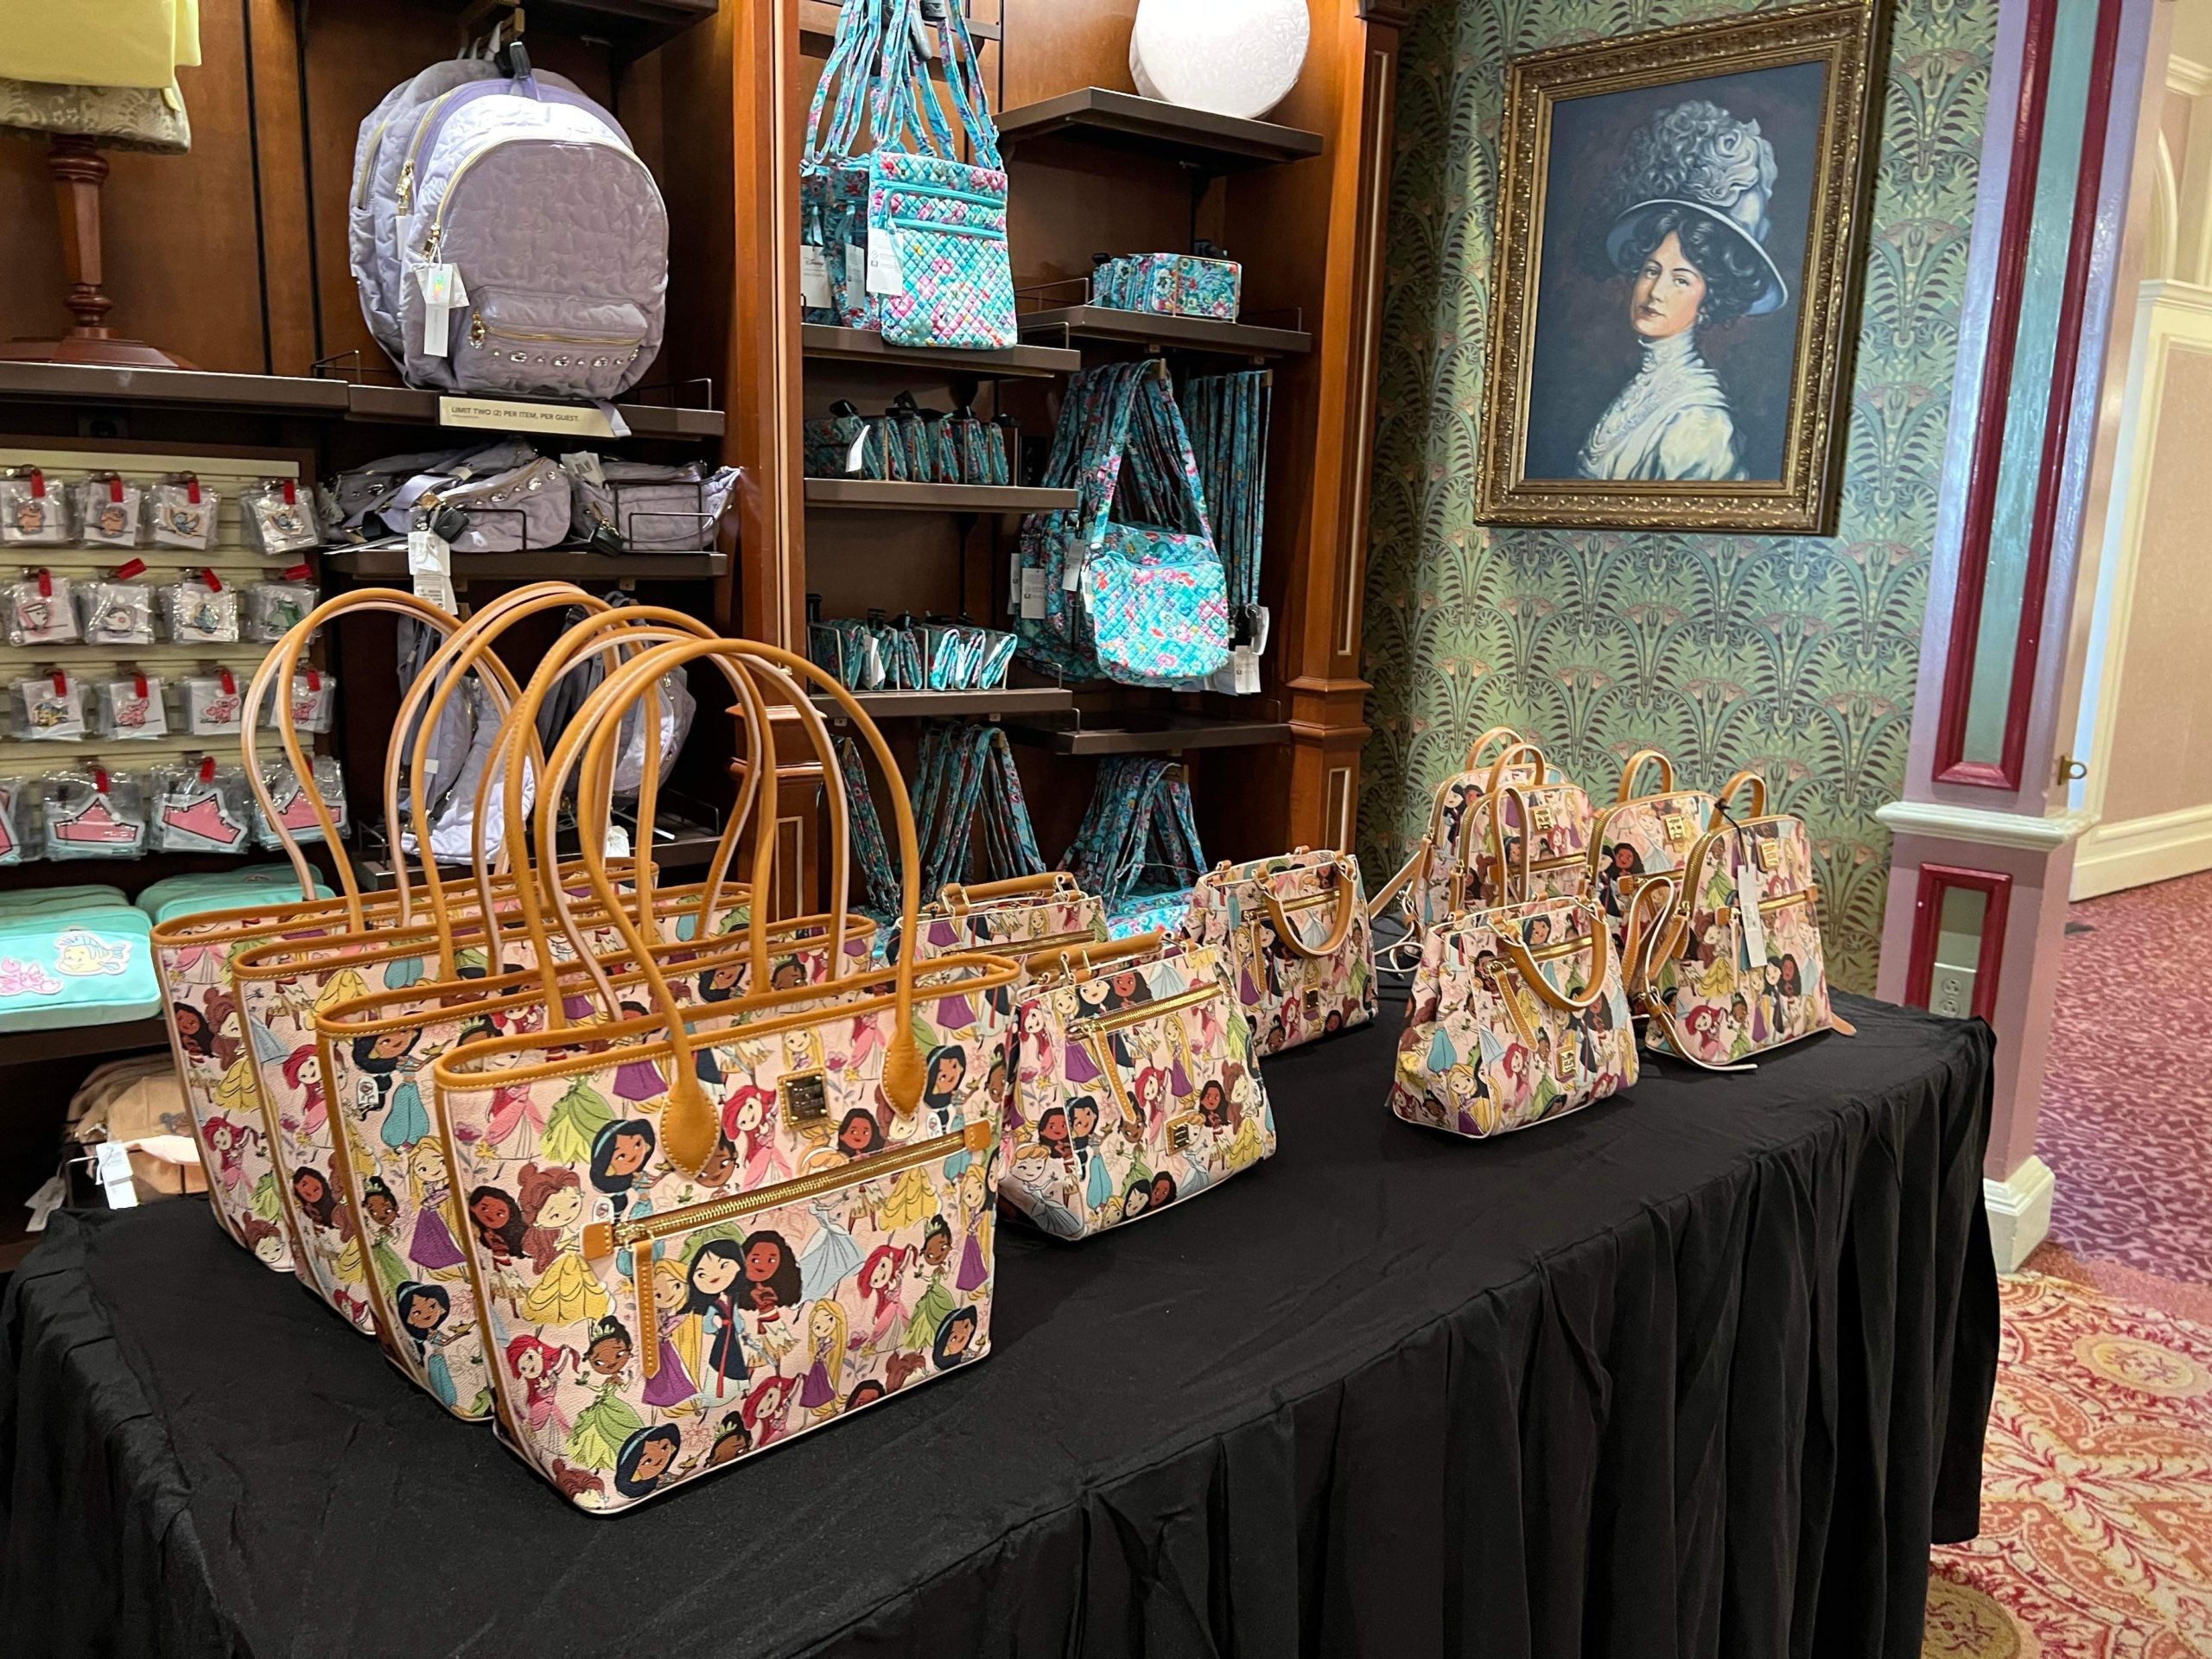 Disney Dooney & Bourke Princesses Tote Bag